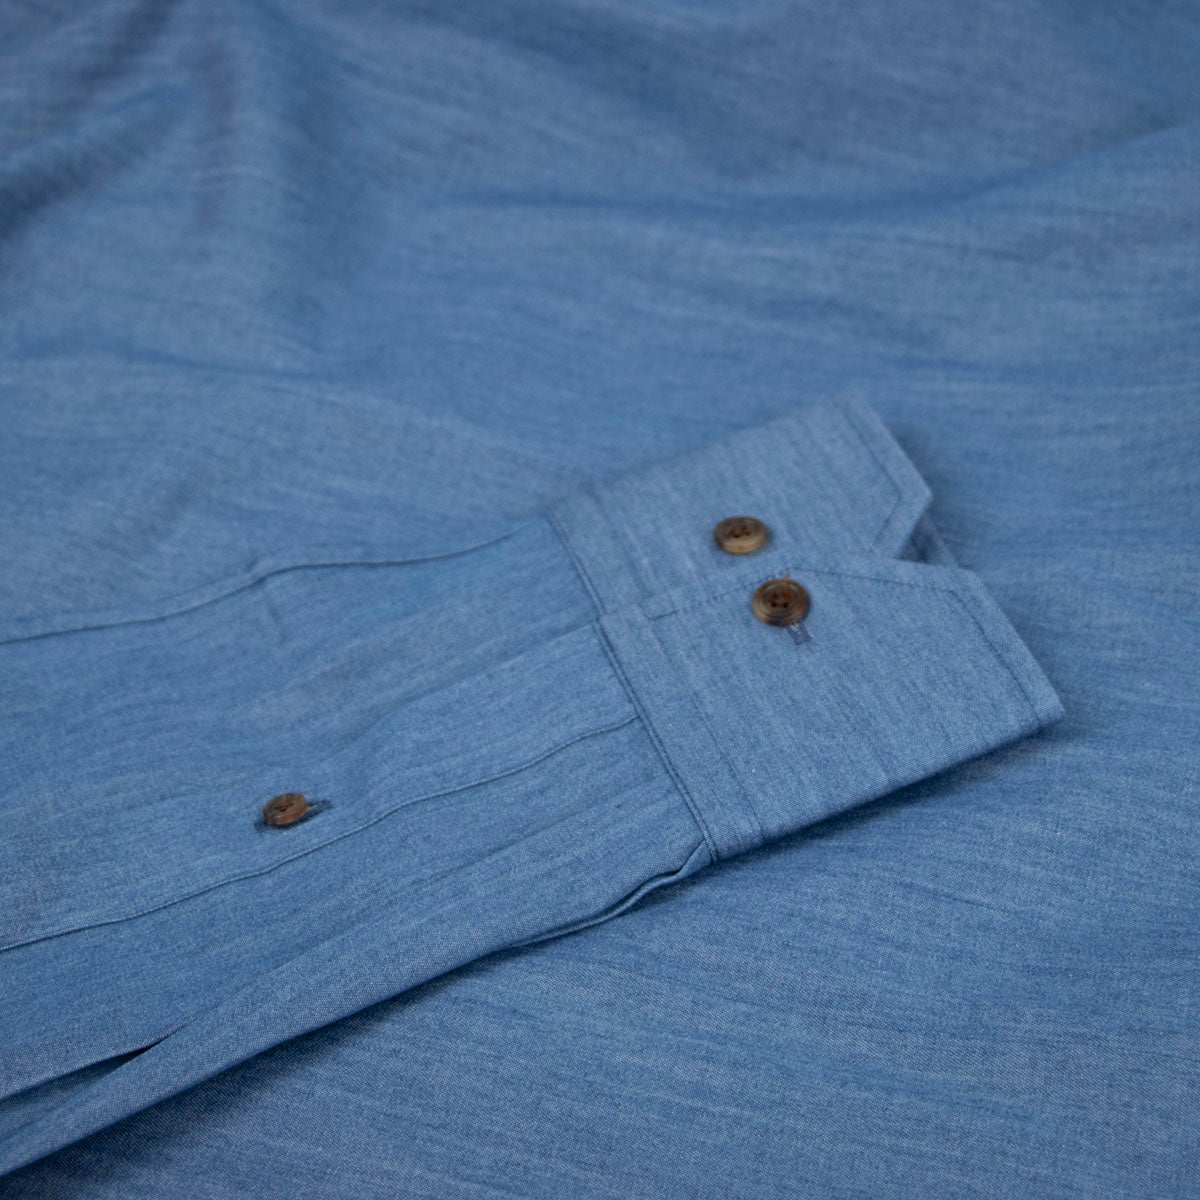 Mid Denim 100% Cotton Long Sleeve Shirt  Robert Old   